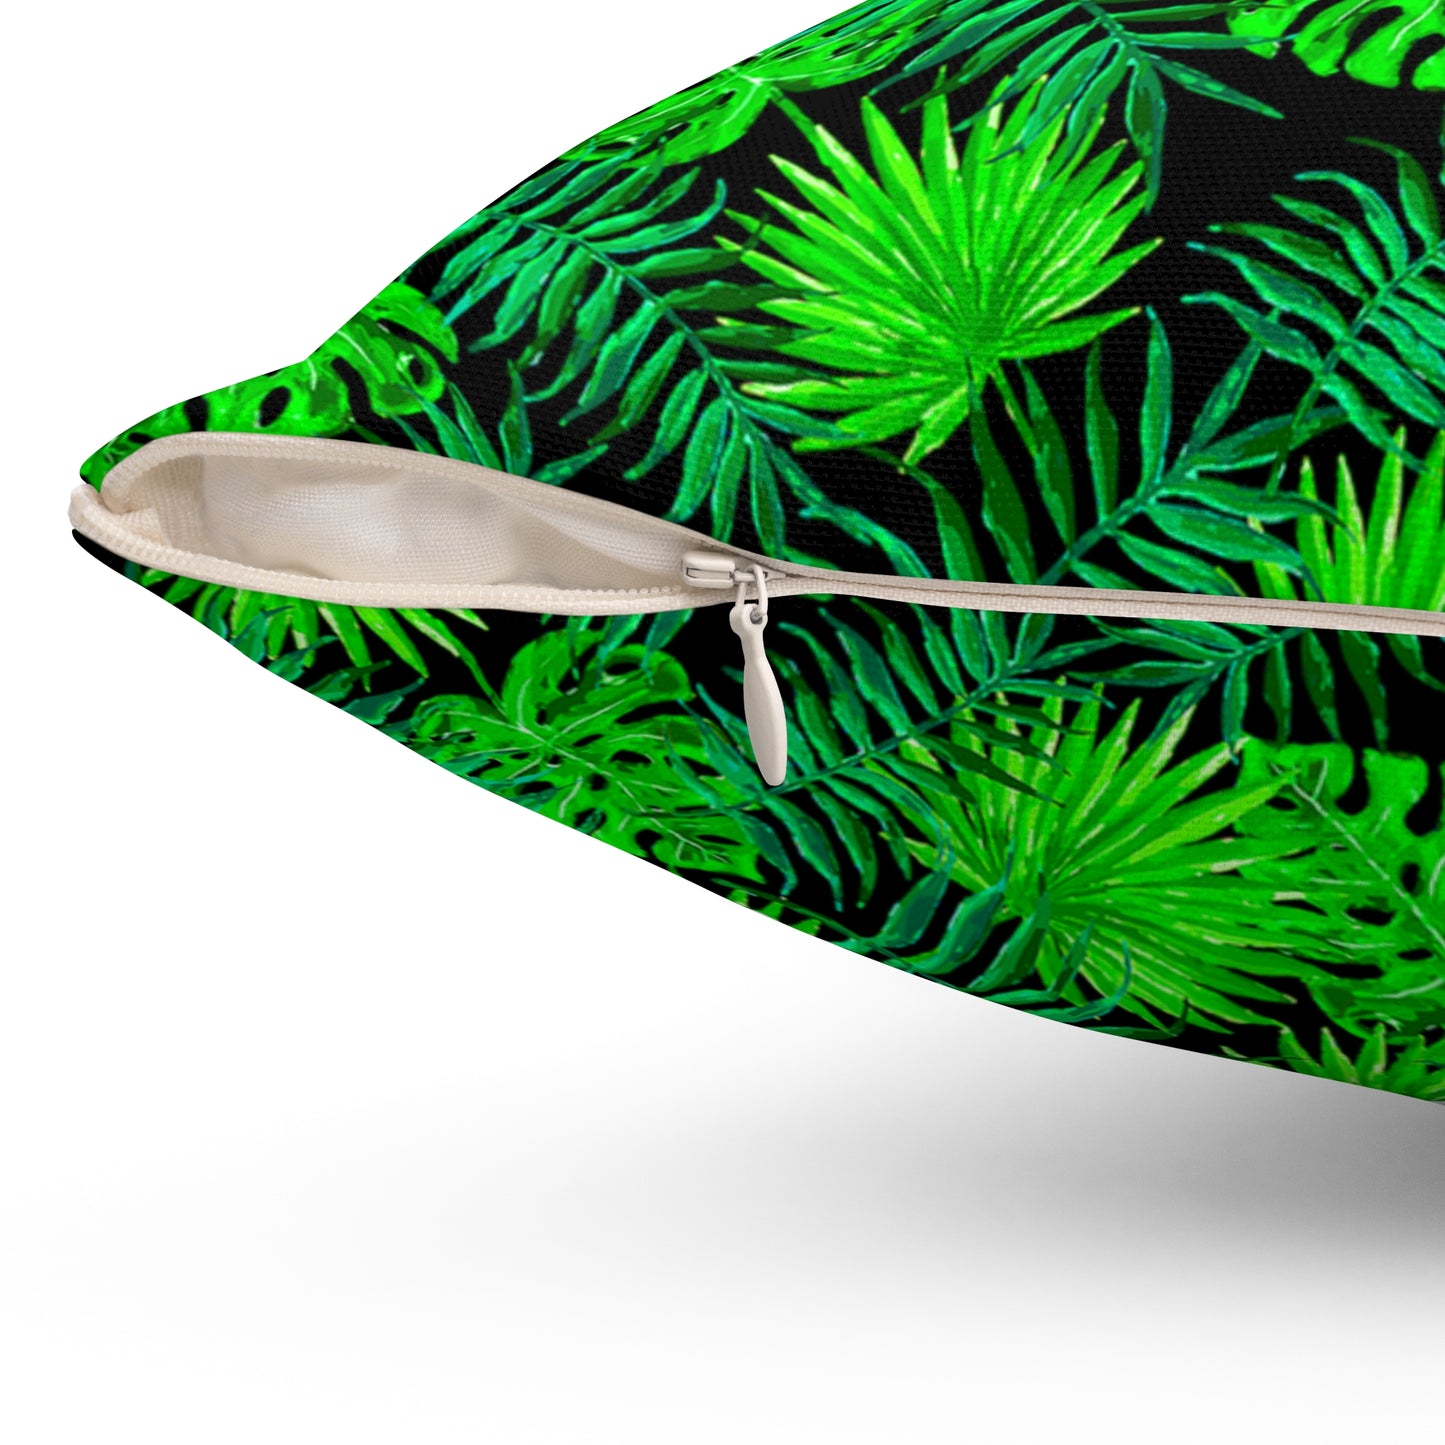 Snooty Fox Art Premium Square Pillow - Palm Green Leaves